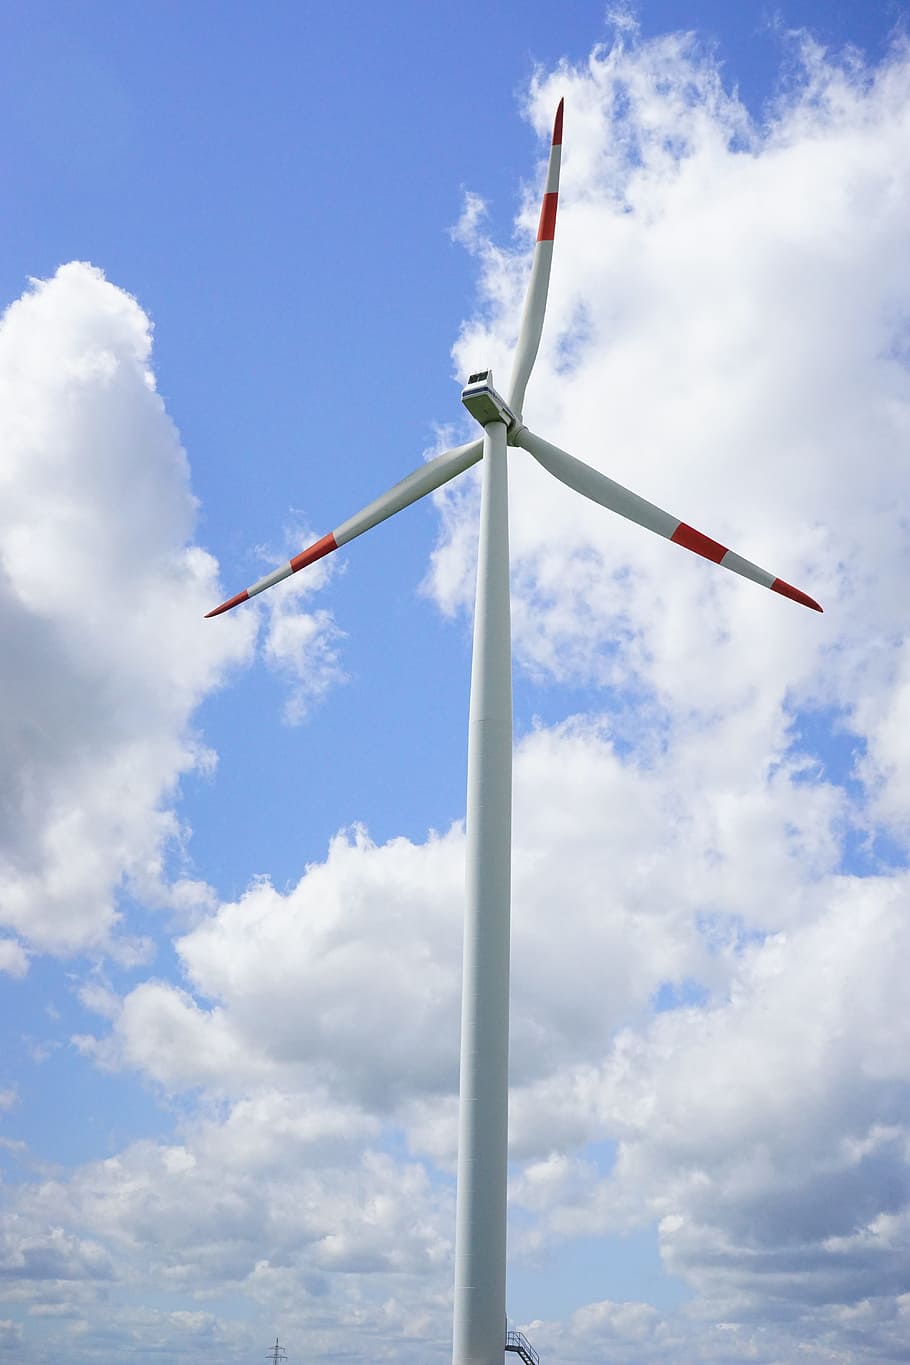 Wind Energy, Wind Power, windräder, energy, environment, current, wind, power generation, environmentally friendly, ecology